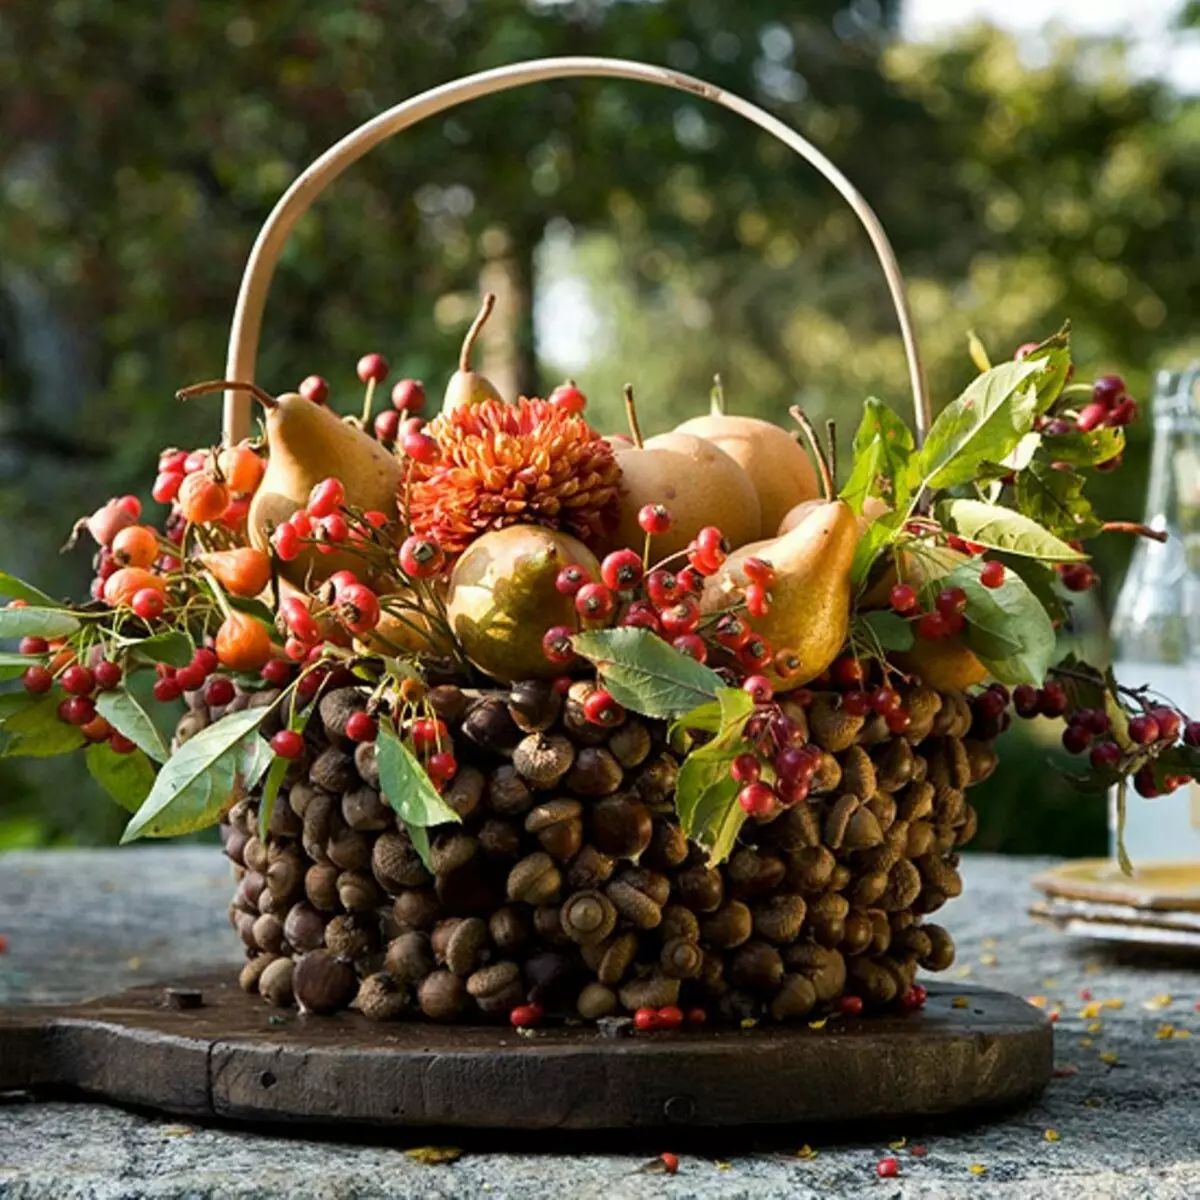 cones ଏବଂ acorns (44 ଫଟୋ) ରୁ କ୍ରାଫ୍ଟଗୁଡିକ: Autumn ପତ୍ରମାନ ସହିତ ଏବଂ ବିଦ୍ୟାଳୟ କୁ ନିଜ ହାତ chestnuts ସହିତ ଏବଂ cones ଏବଂ acorns ବାଳକମାନଙ୍କୁ, ଅନ୍ୟ କ୍ରାଫ୍ଟଗୁଡିକ ପାଇଁ kindergarten ରେ କ୍ରାଫ୍ଟଗୁଡିକ 26775_24